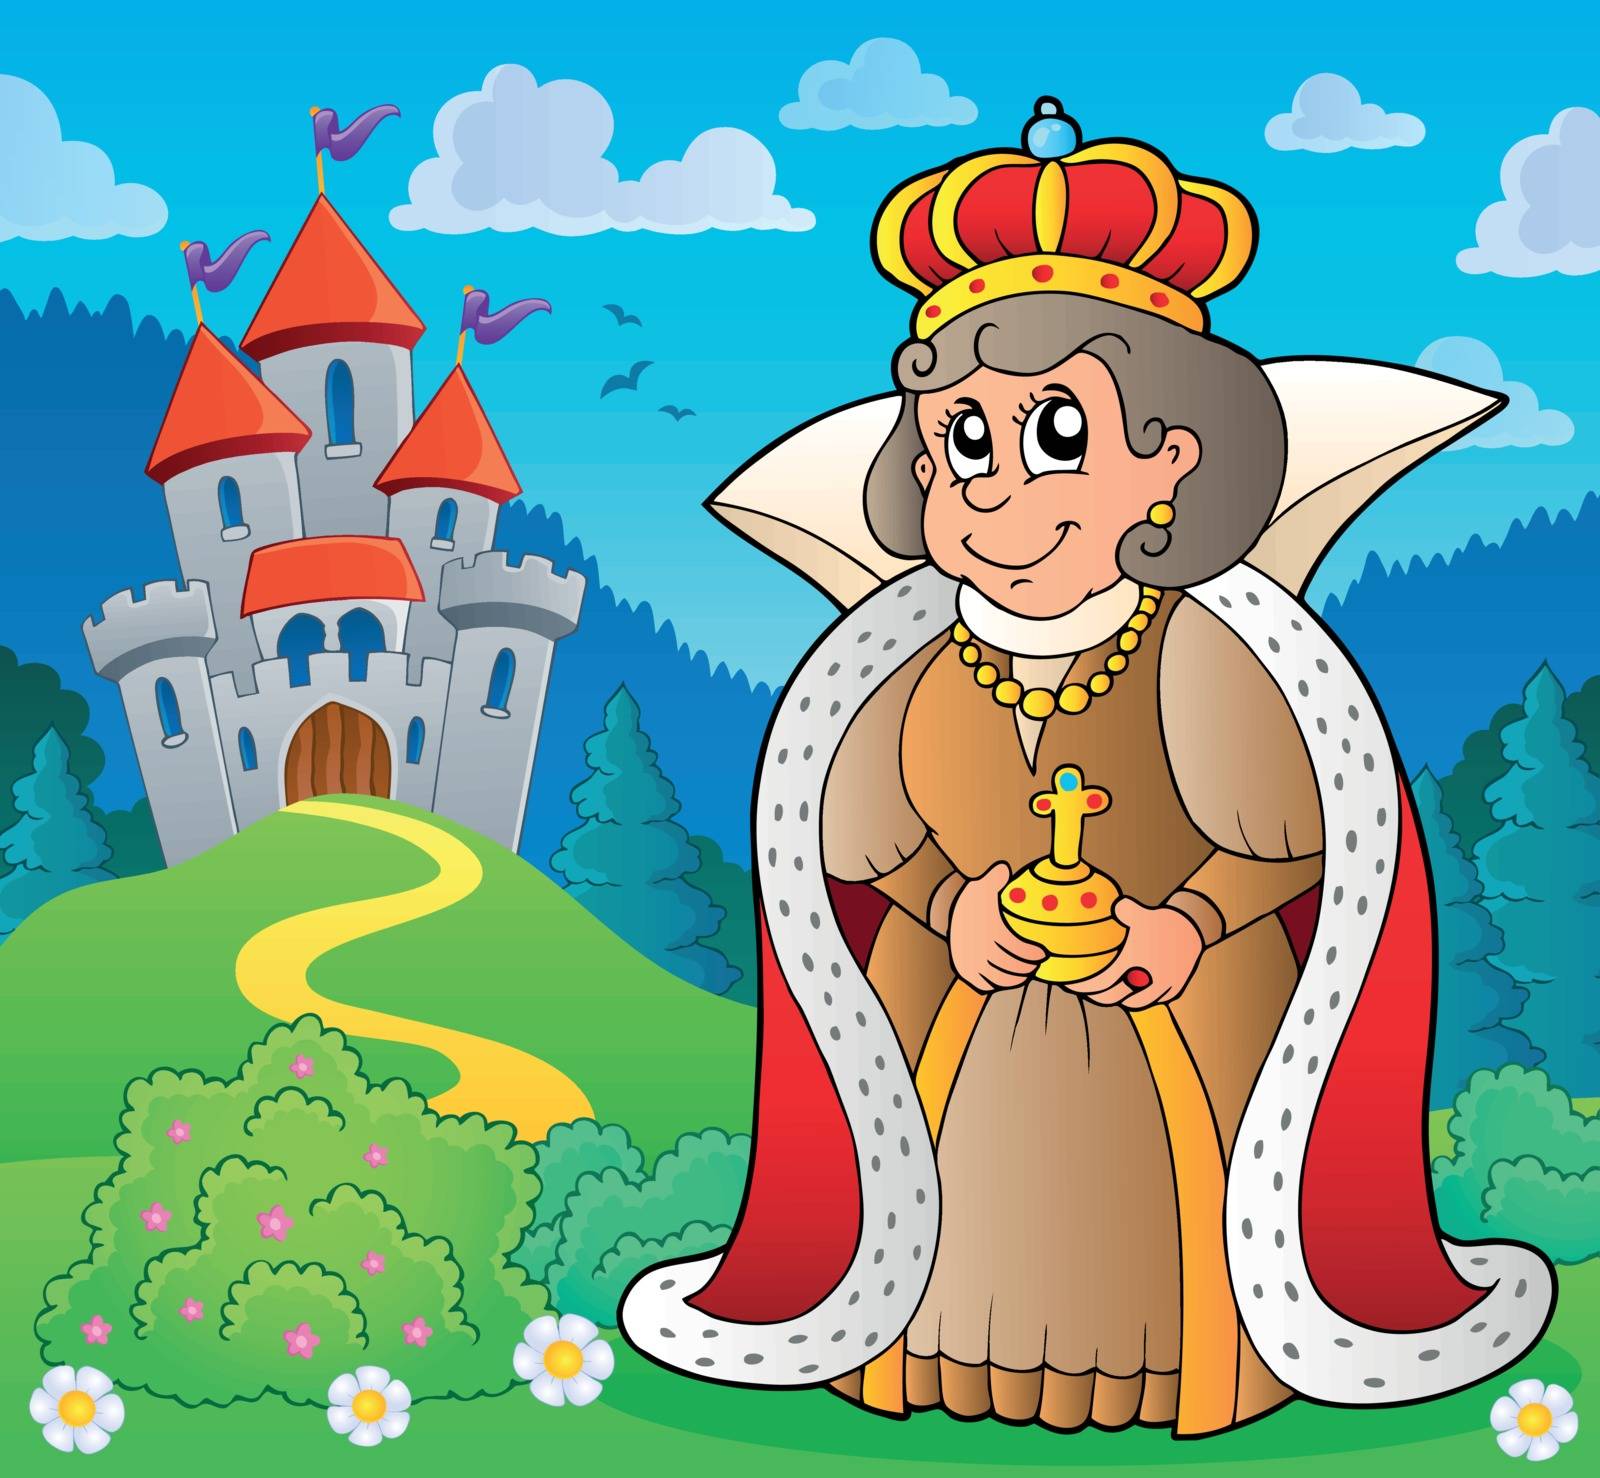 Happy queen near castle theme 4 - eps10 vector illustration.